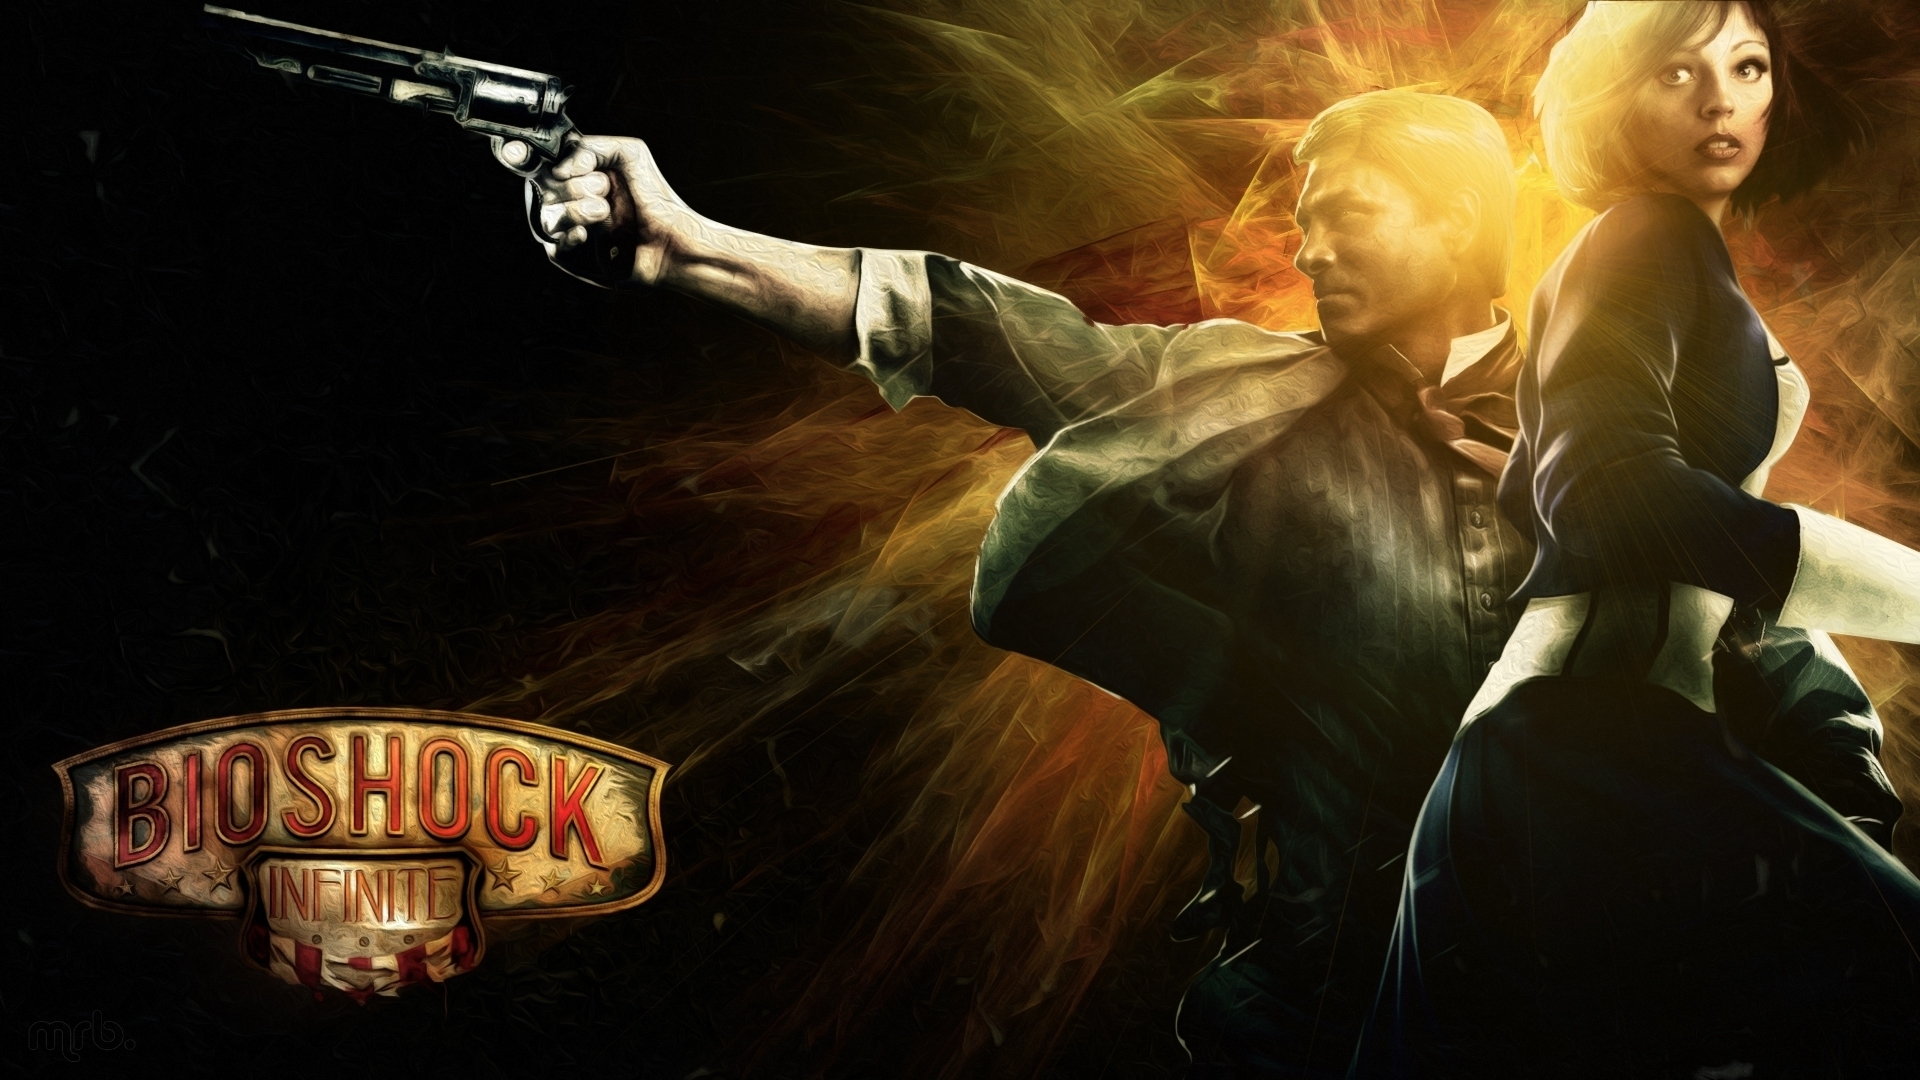 Free Bioshock Infinite HD wallpaper